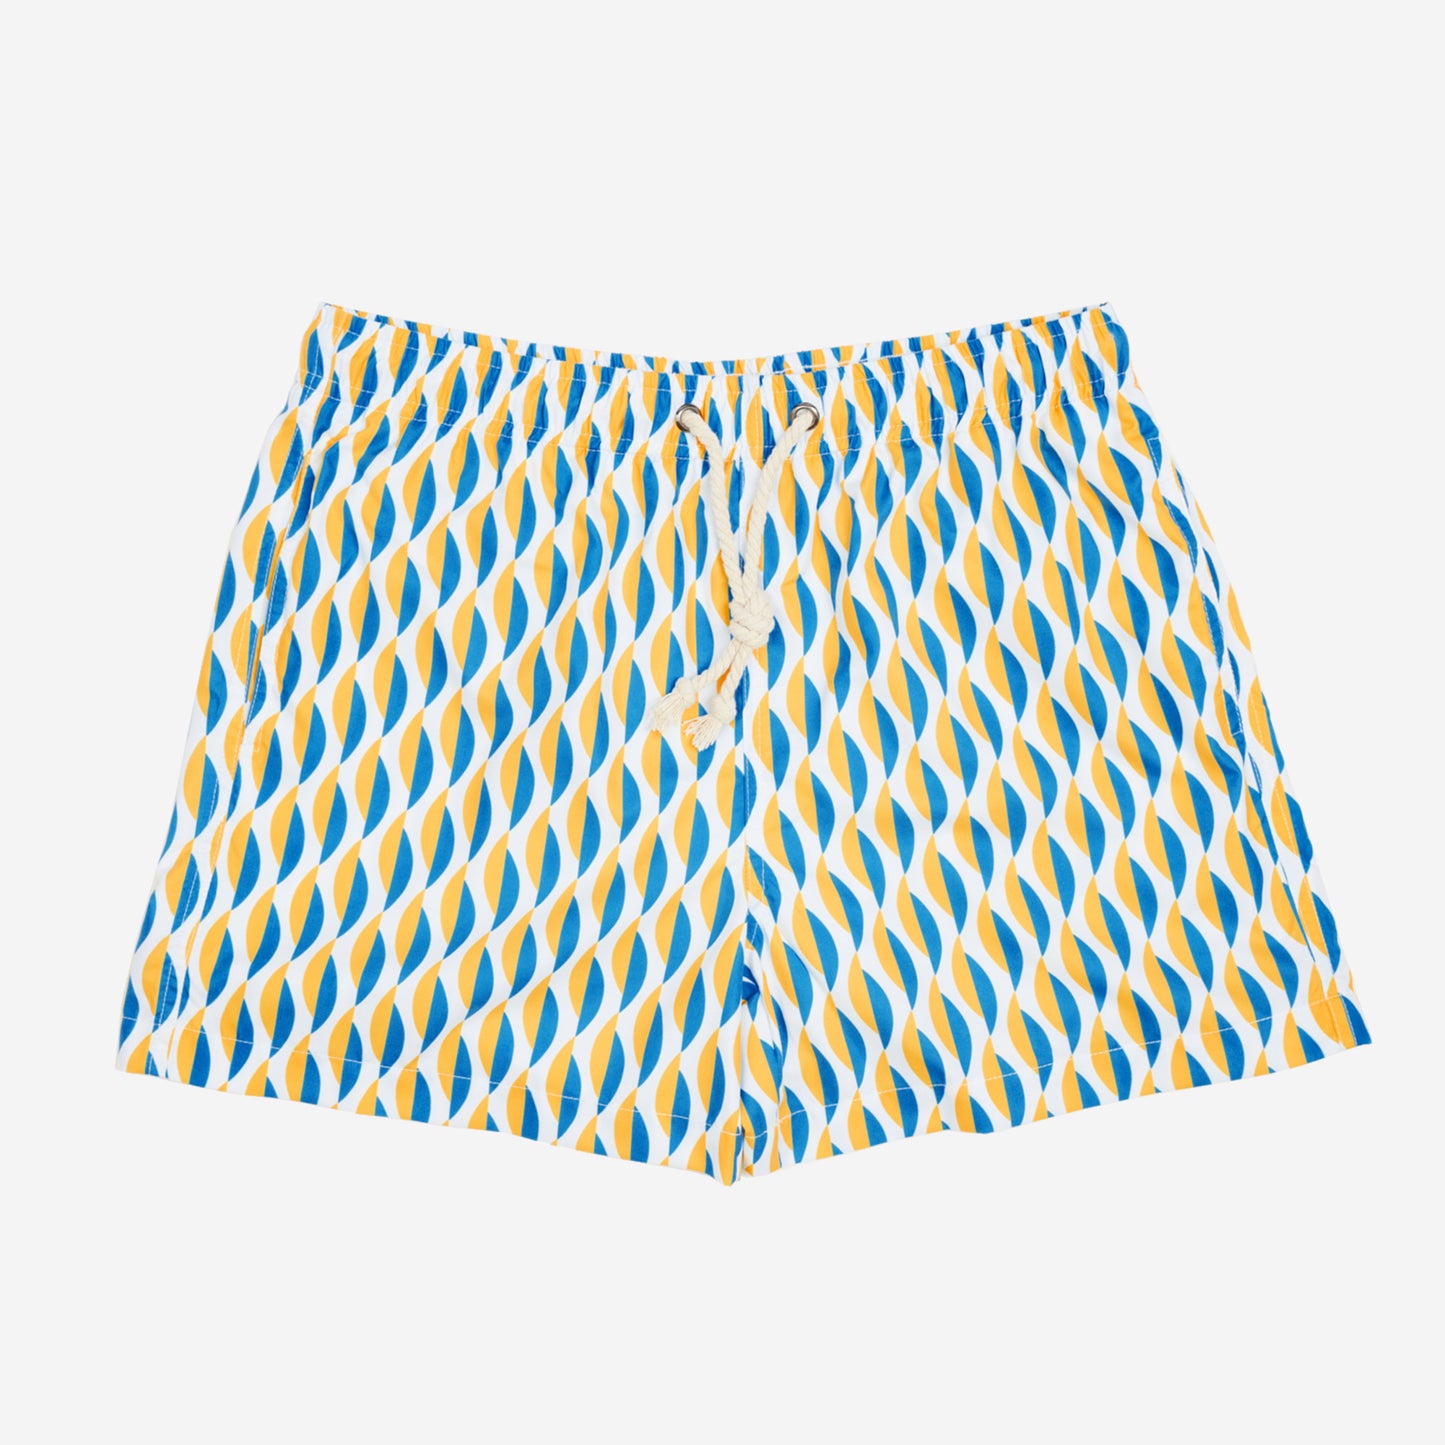 Sustainable Men's Swimsuit - Sestri Levante Yellow